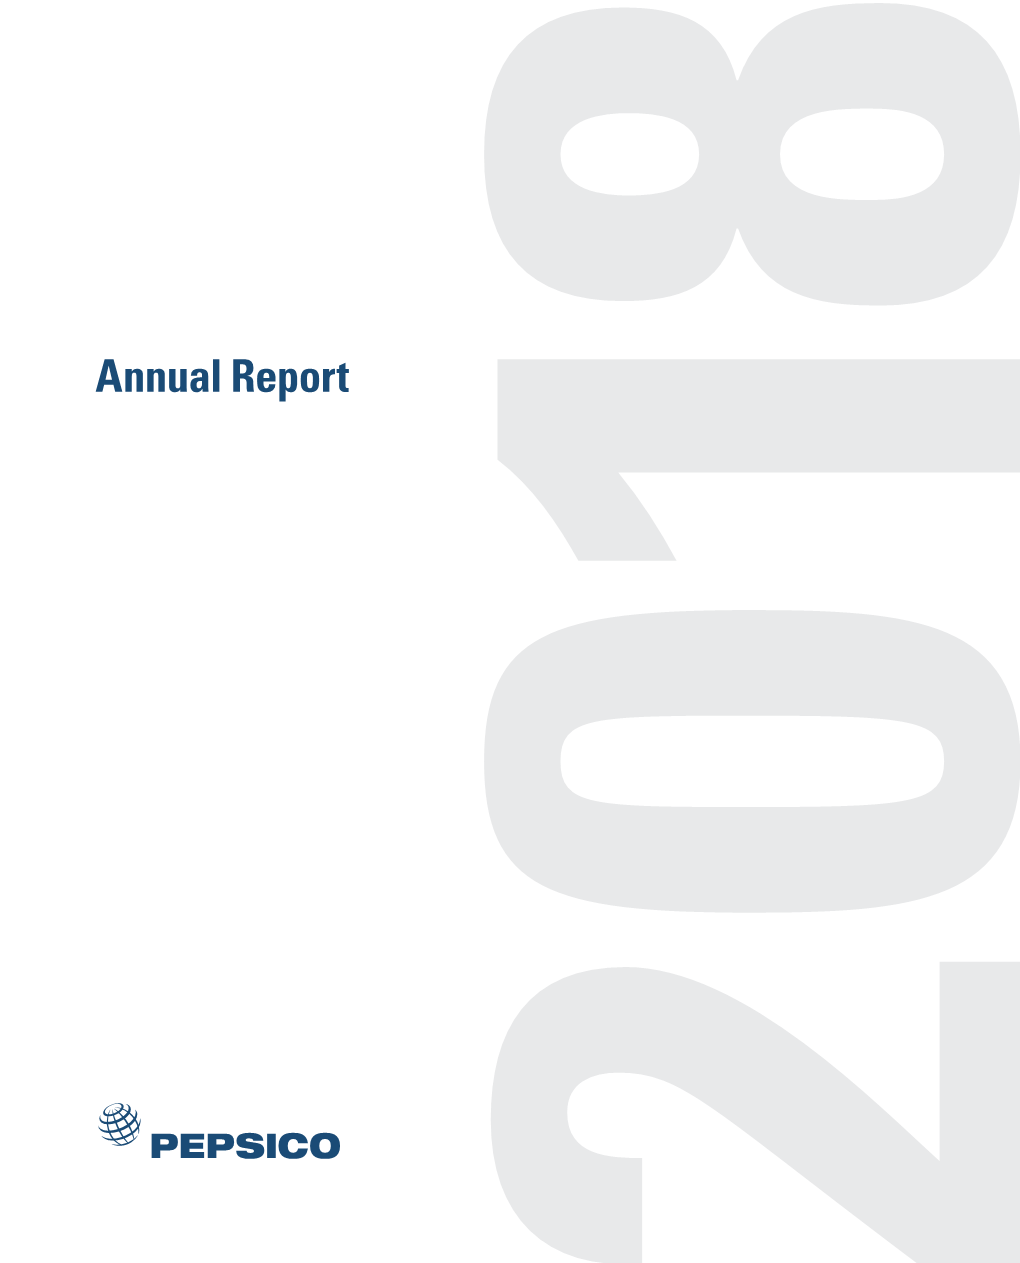 2018 Annual Report 1020141Pe Cover.Indd 1 3/15/19 12:57 PM